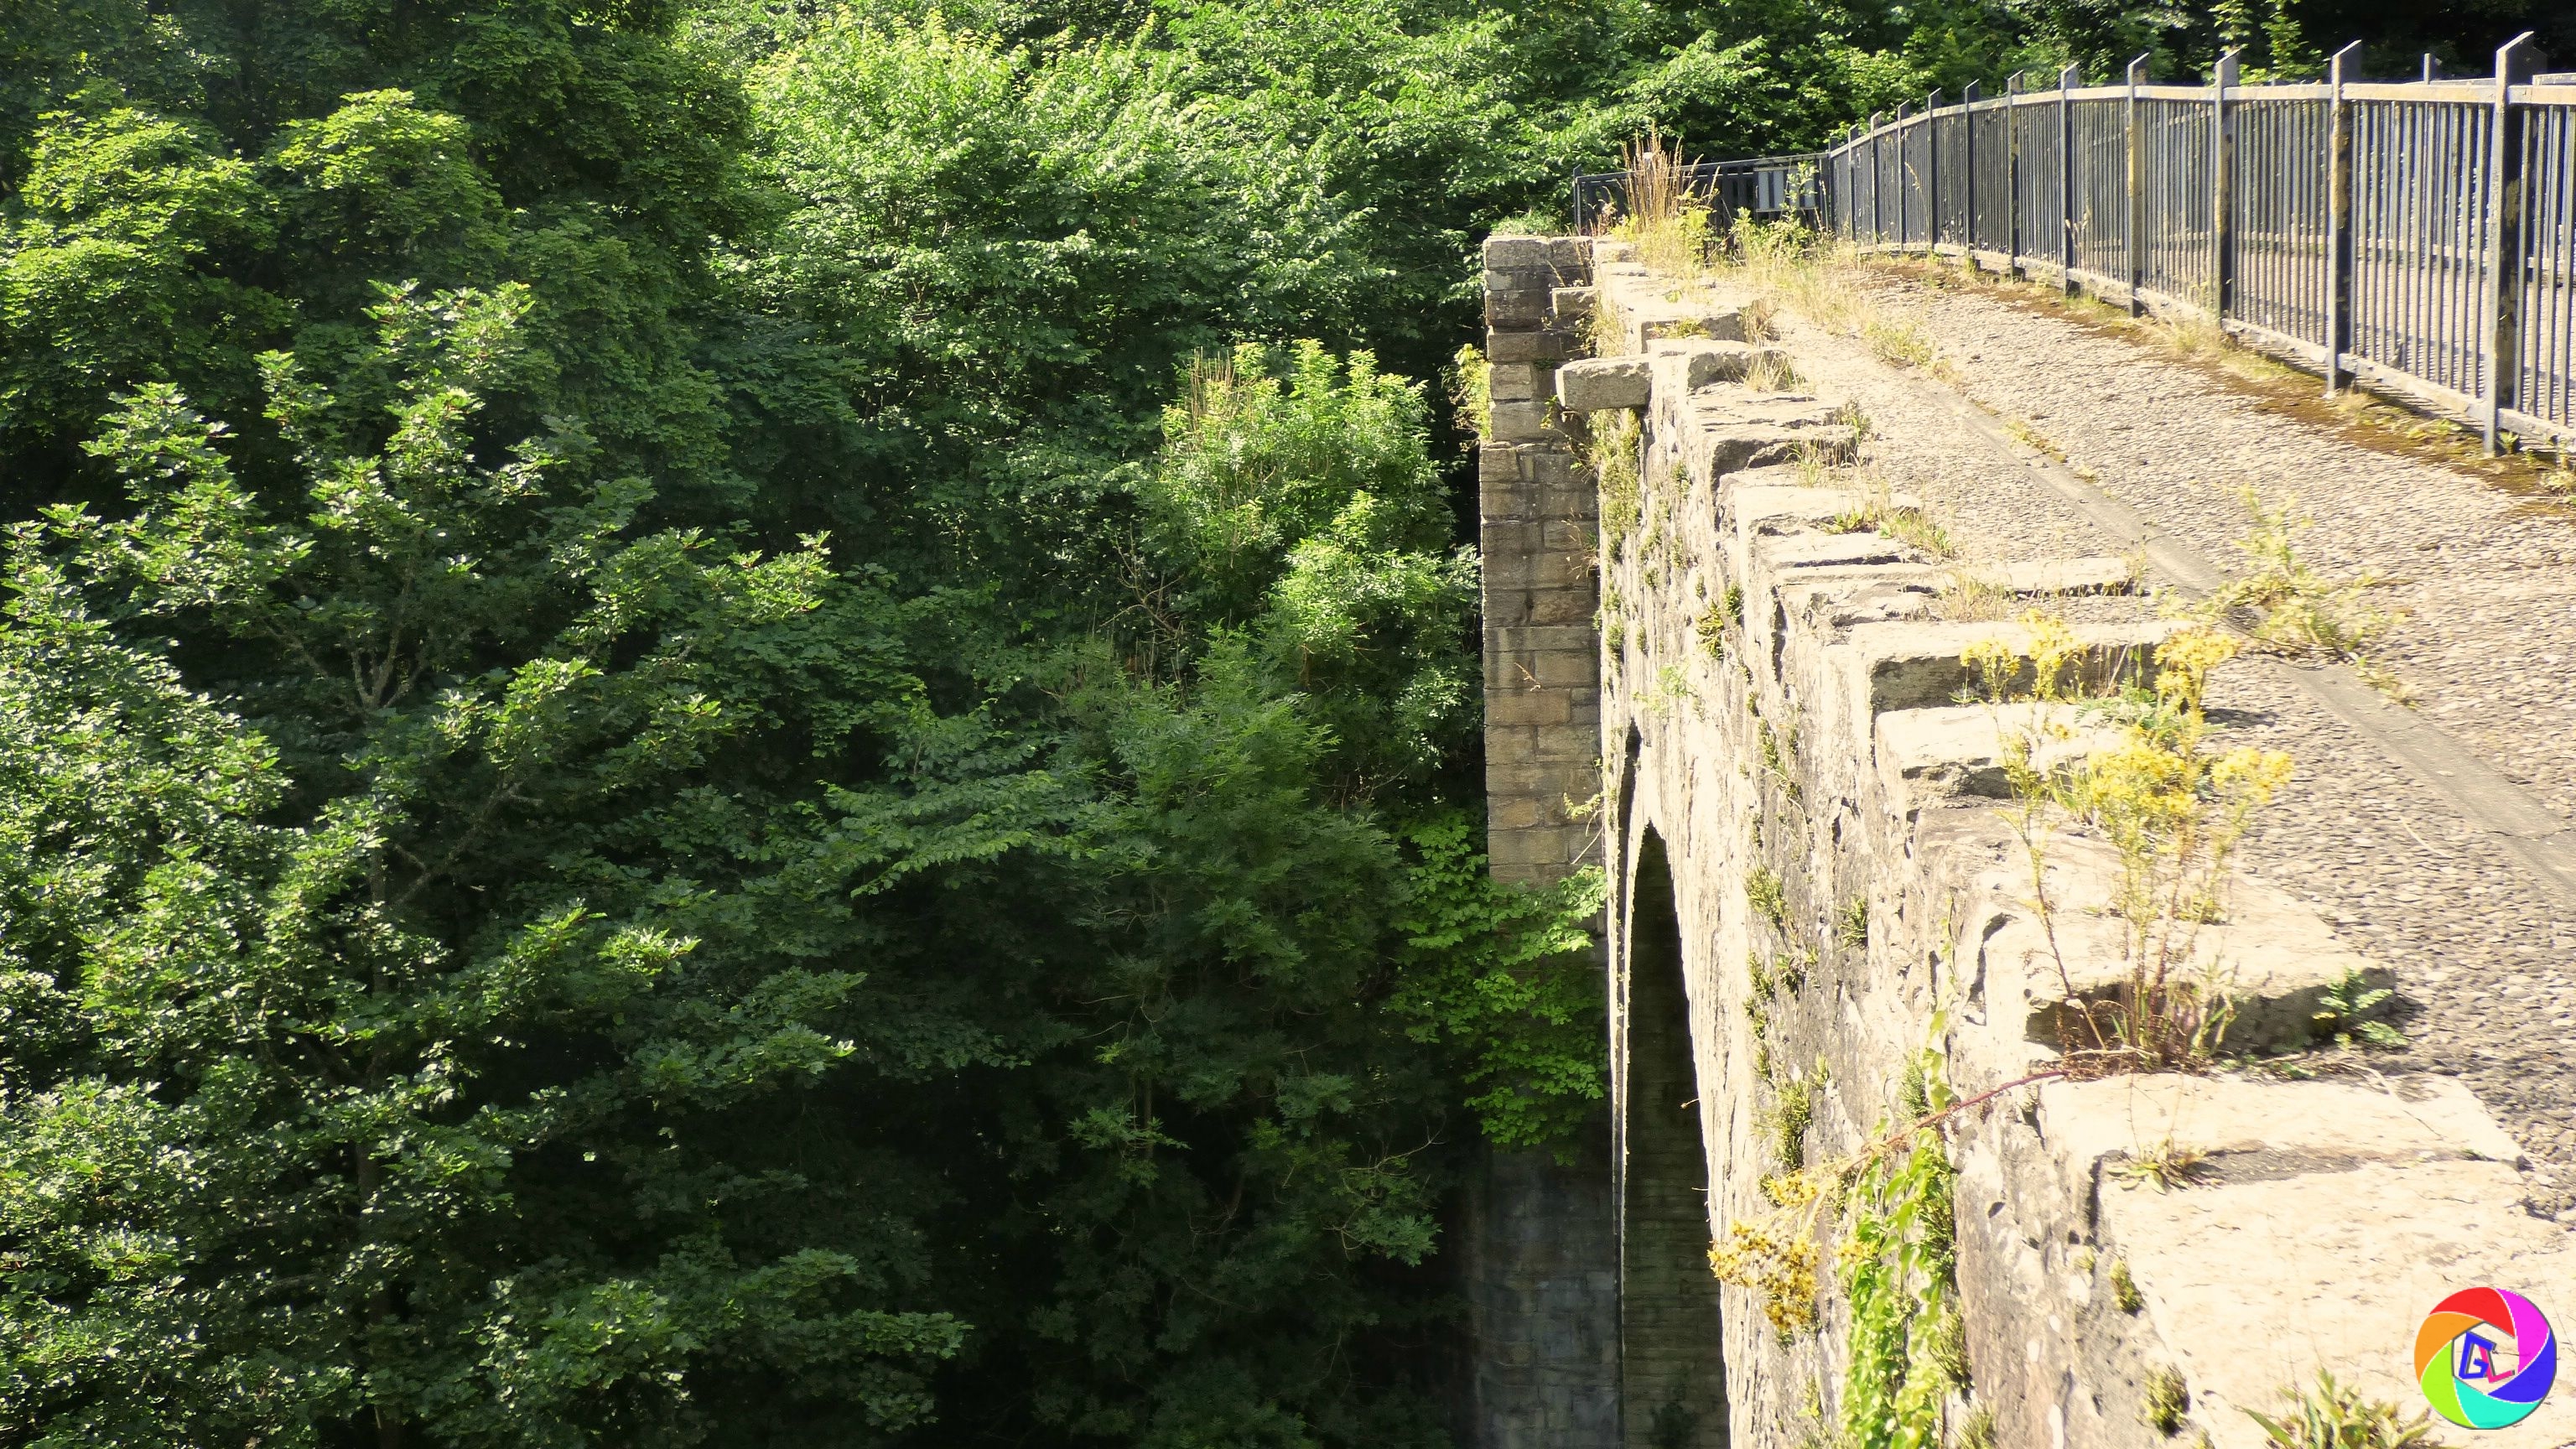 Oldest surviving single arch railway bridge in the world, built in 1725